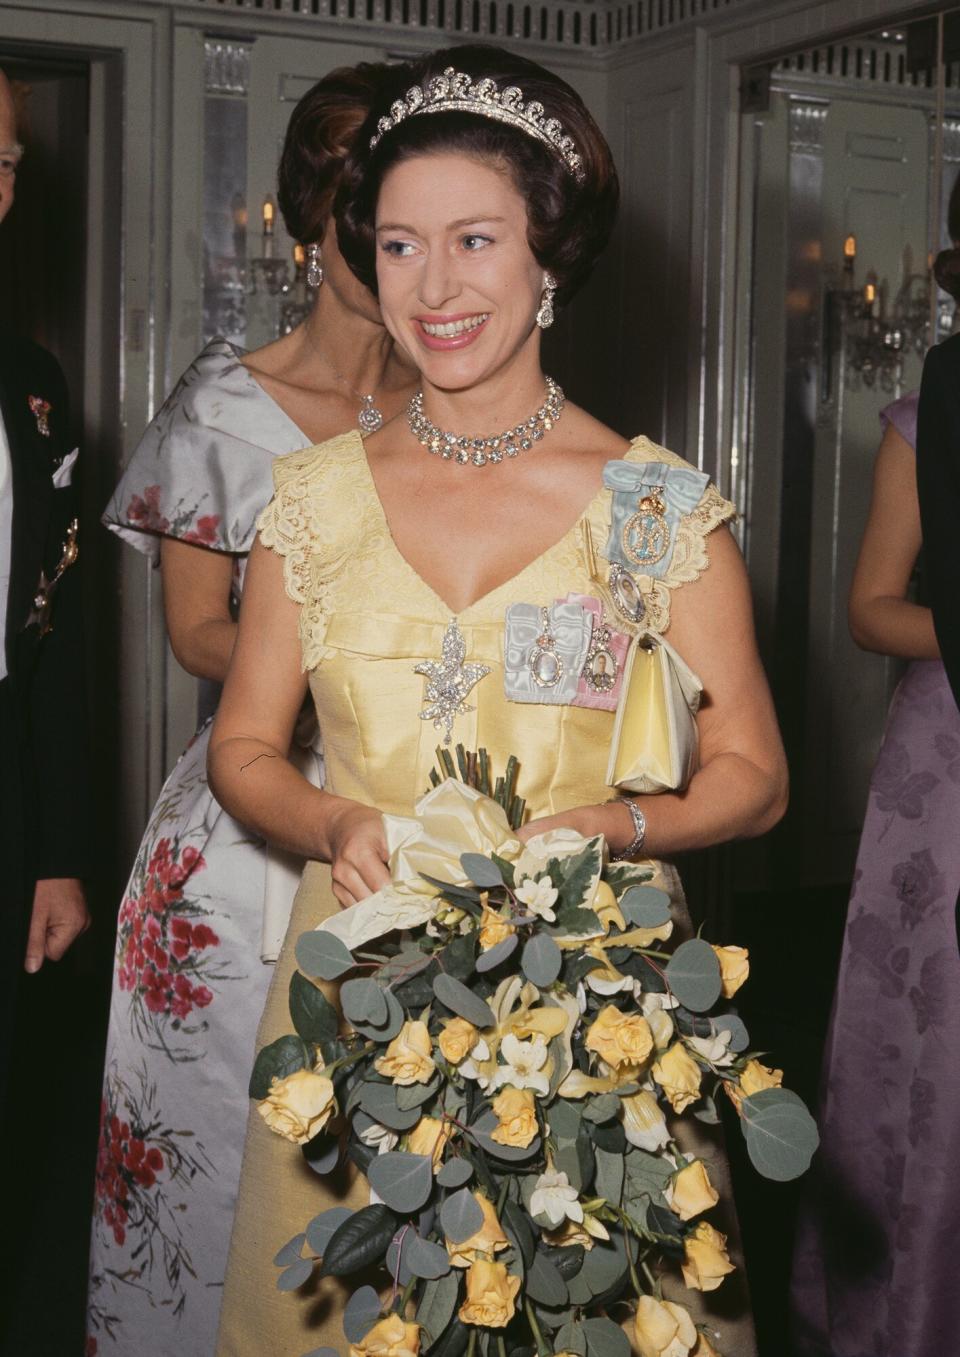 Princess Margaret (1930 - 2002) wearing a yellow evening dress, circa 1970